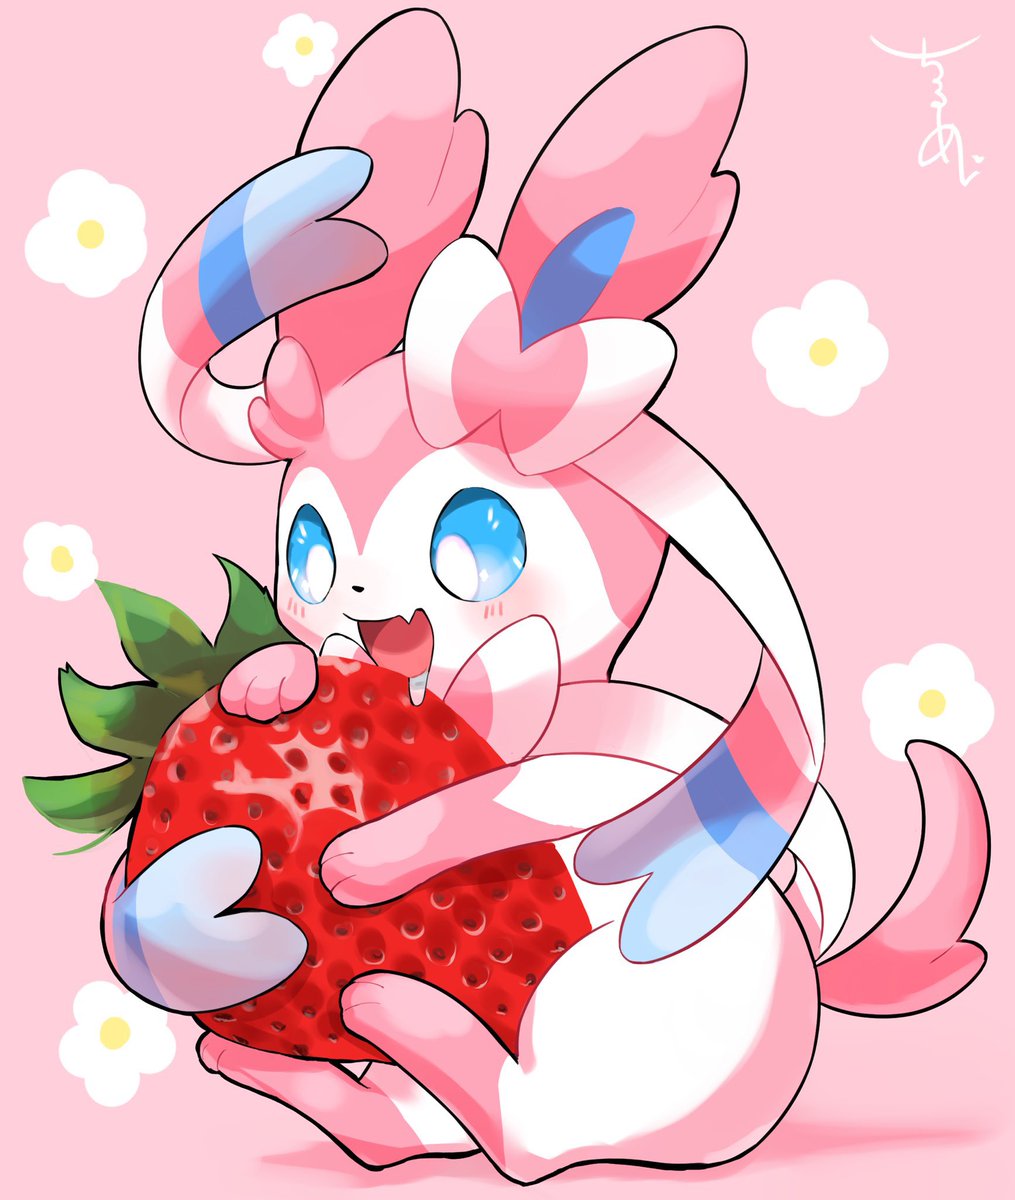 sylveon no humans pokemon (creature) food strawberry fruit holding blue eyes  illustration images